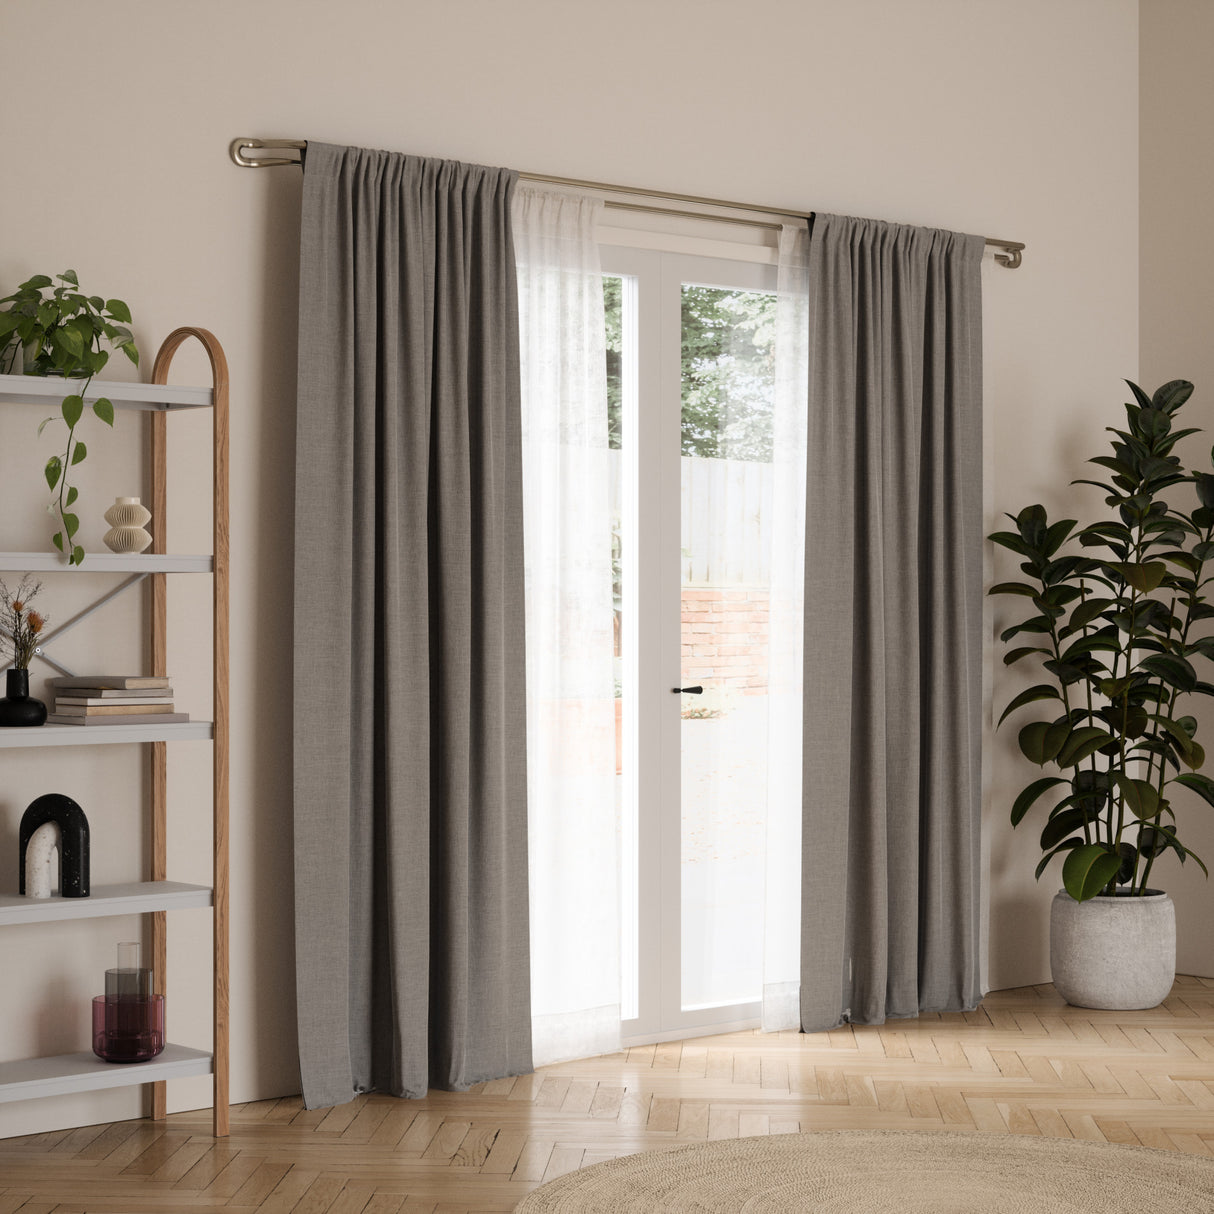 Double Curtain Rods | color: Eco-Friendly Finish Nickel | size: 42-120" (107-305 cm) | diameter: 3/4" (1.9 cm)